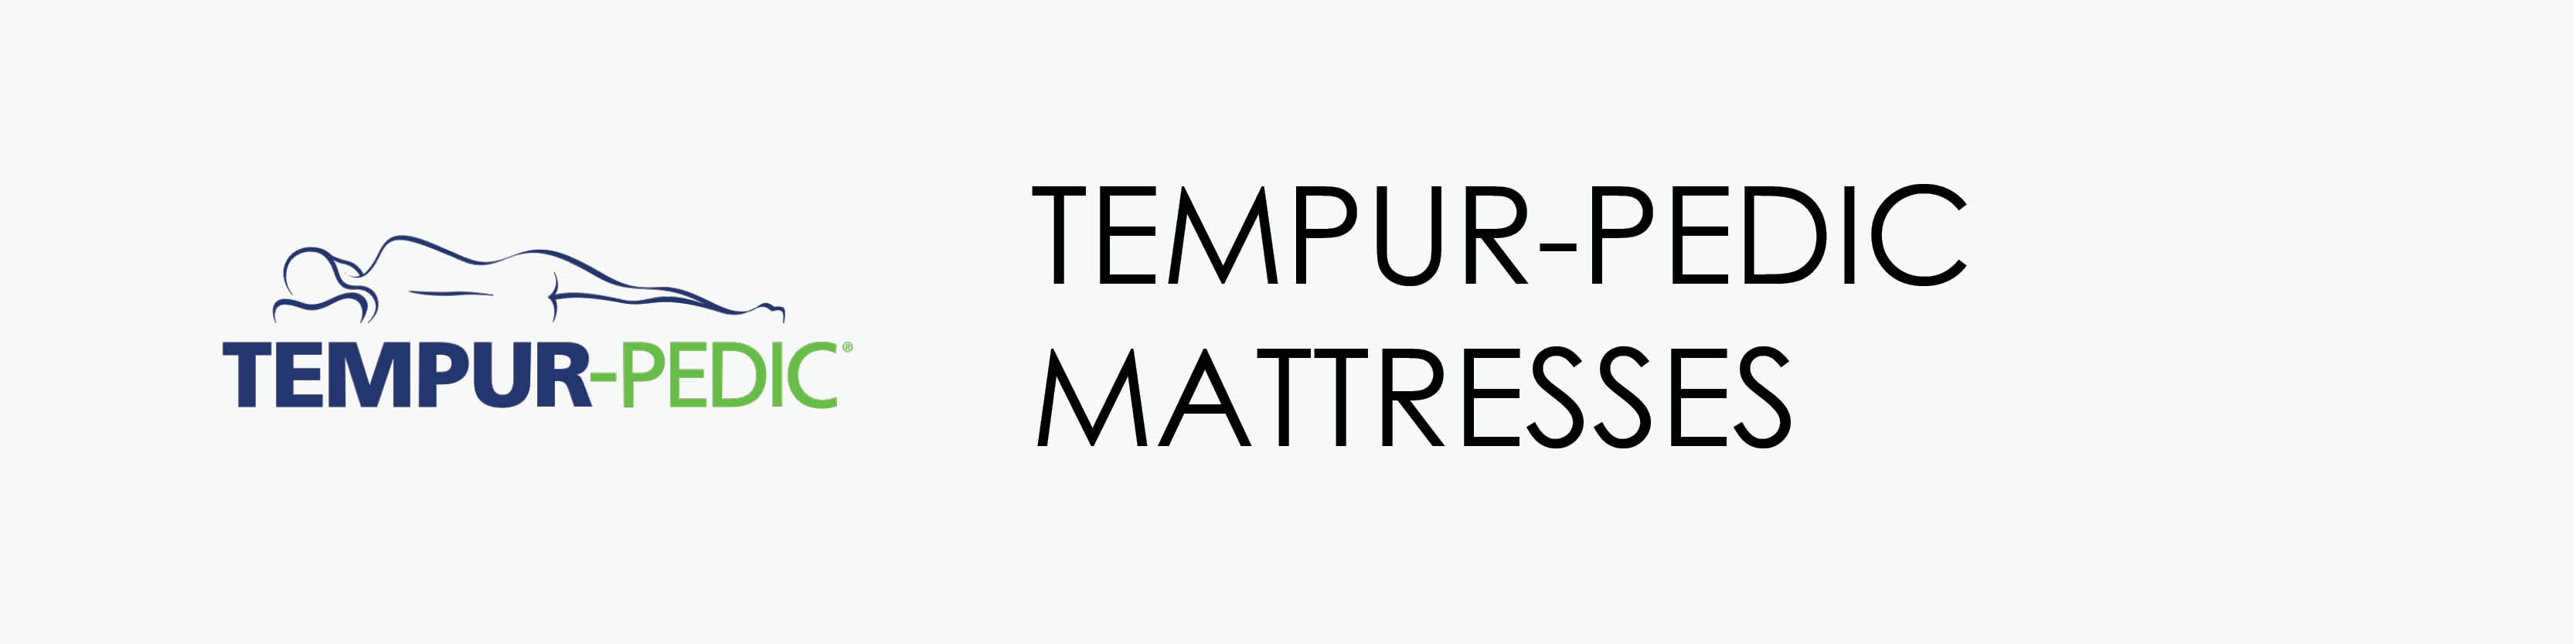 Tempur-Pedic Mattresses